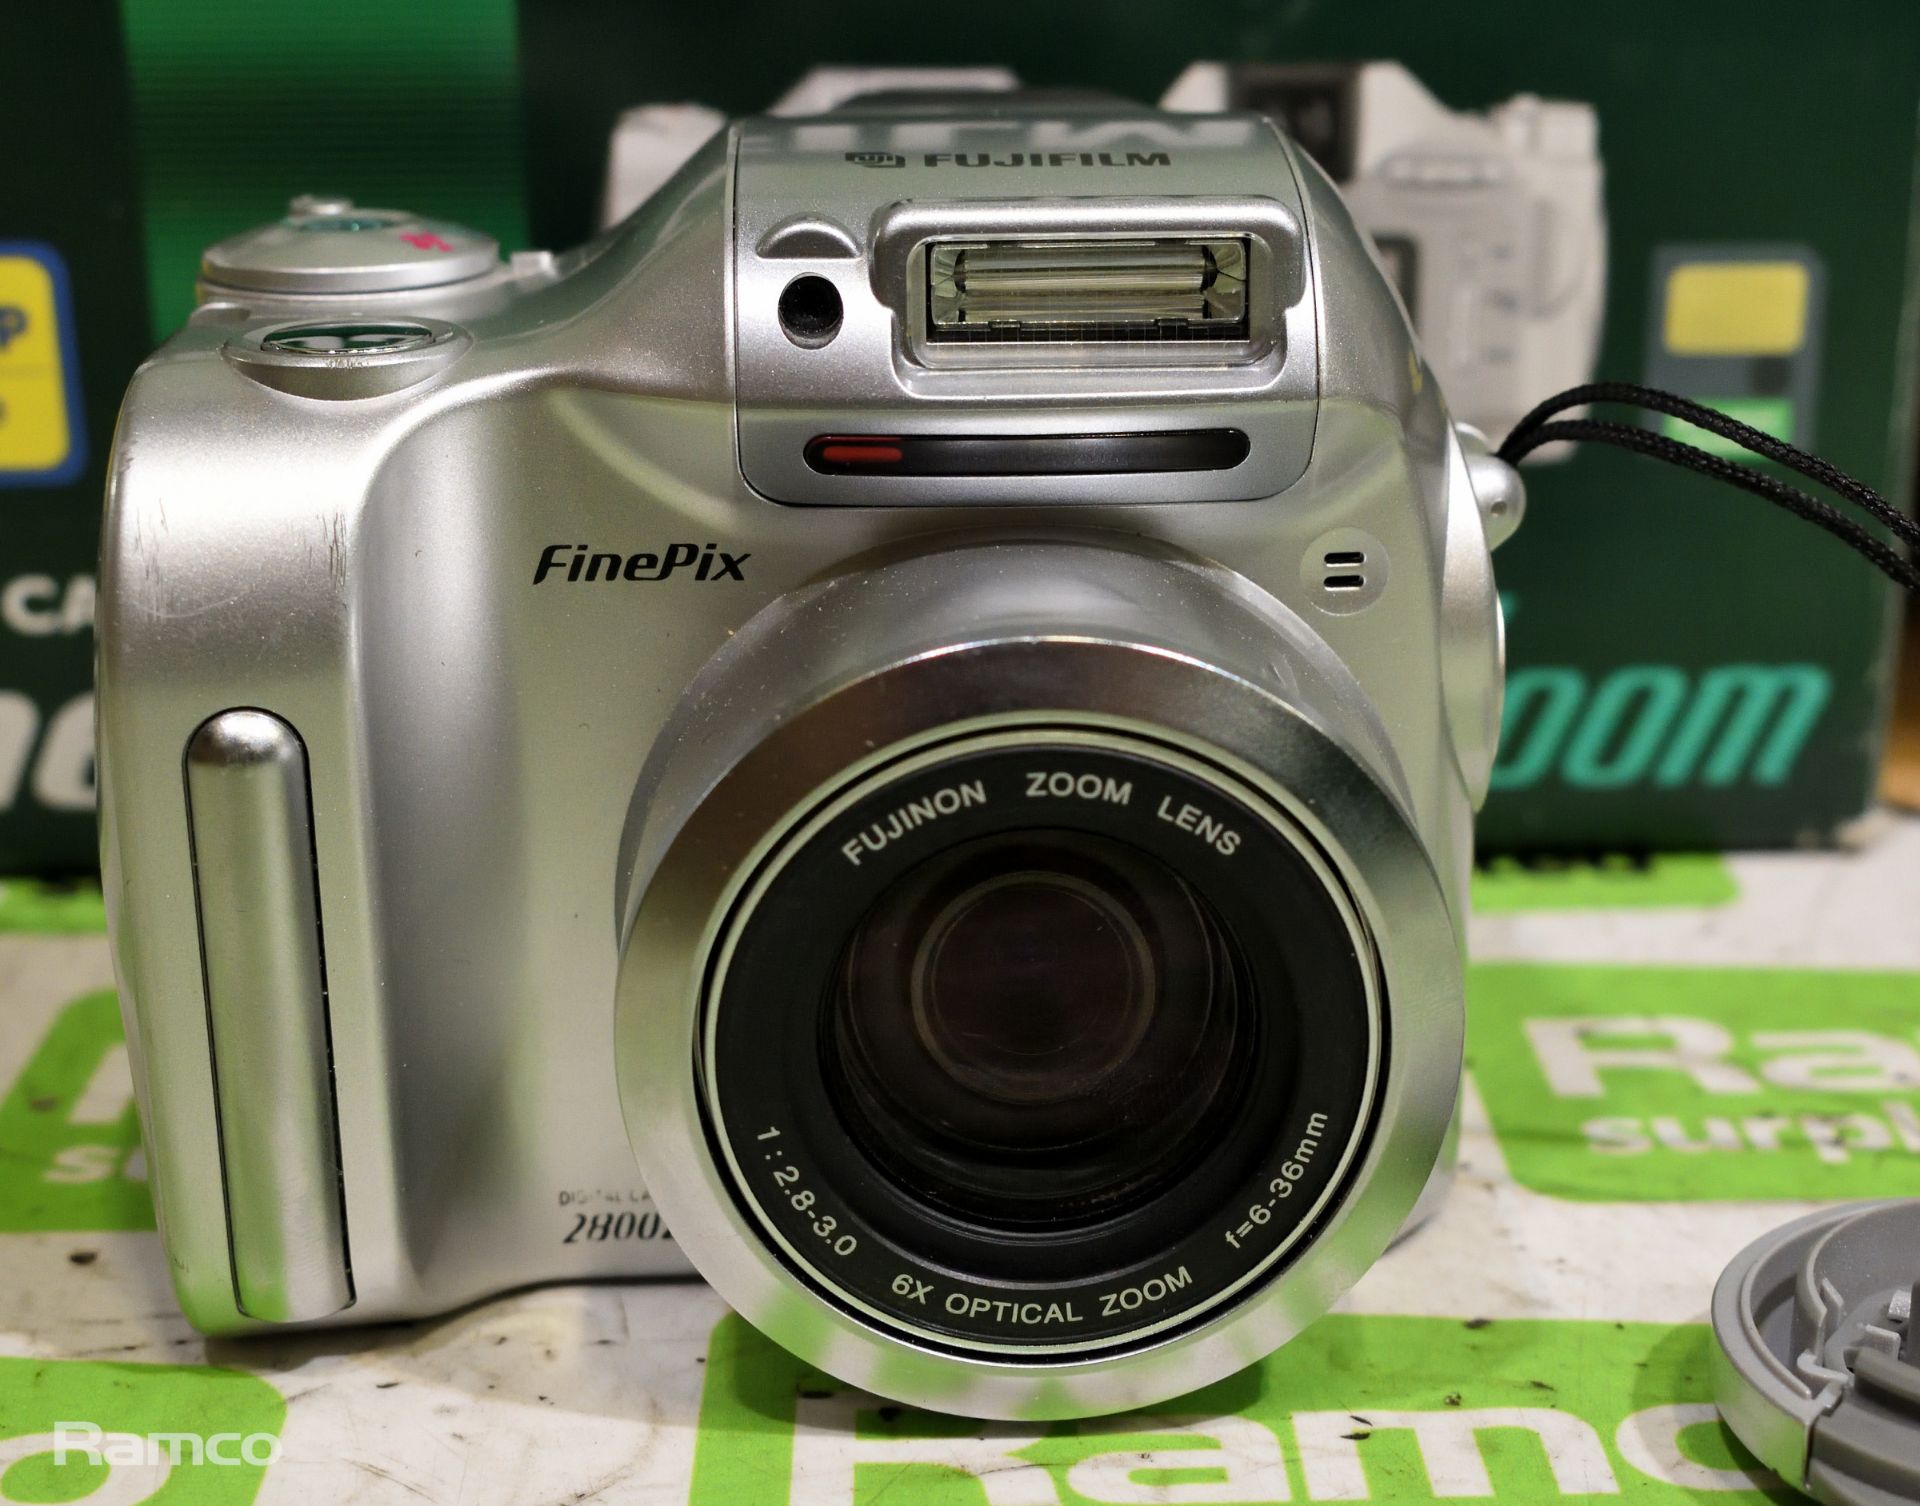 Fujifilm Finepix 2800 Zoom digital camera with box, Olympus Superzoom 700XB compact camera with box - Bild 2 aus 12